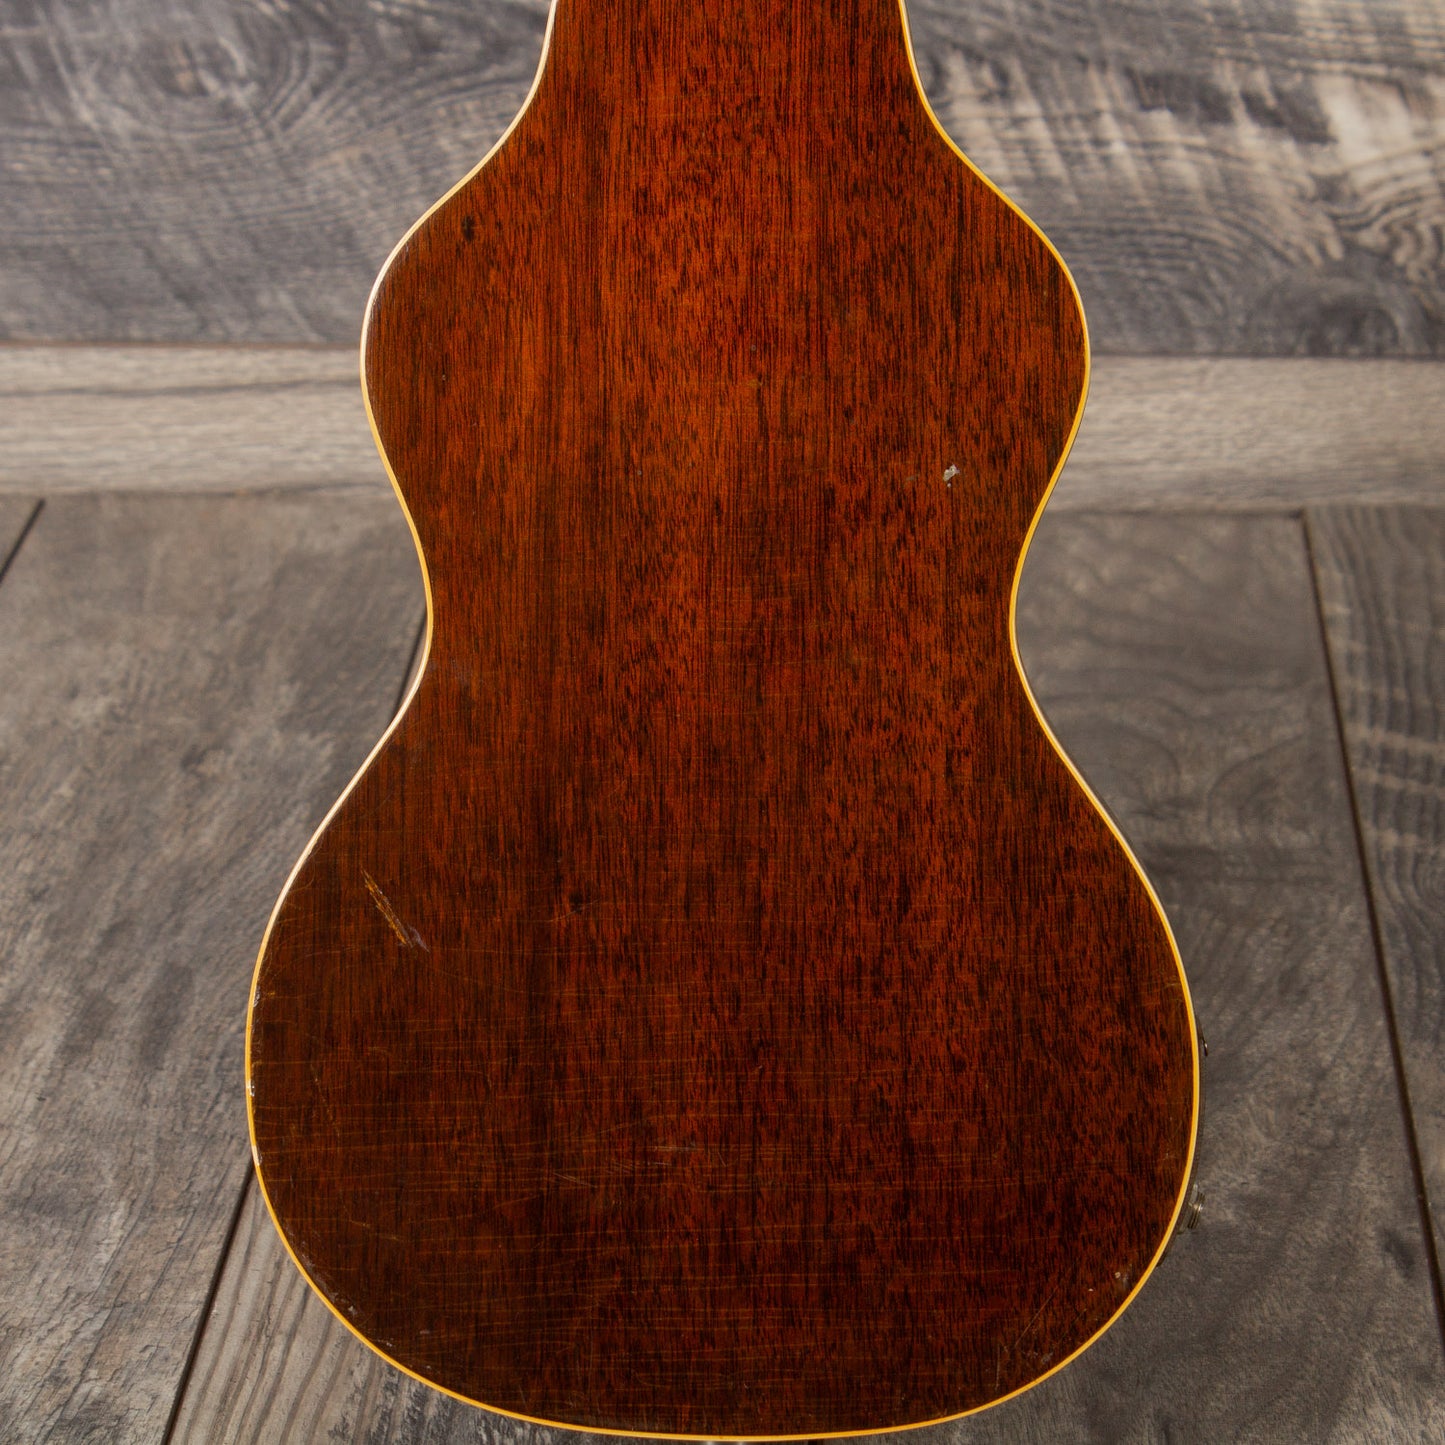 1940's Gibson BR4 Lap Steel